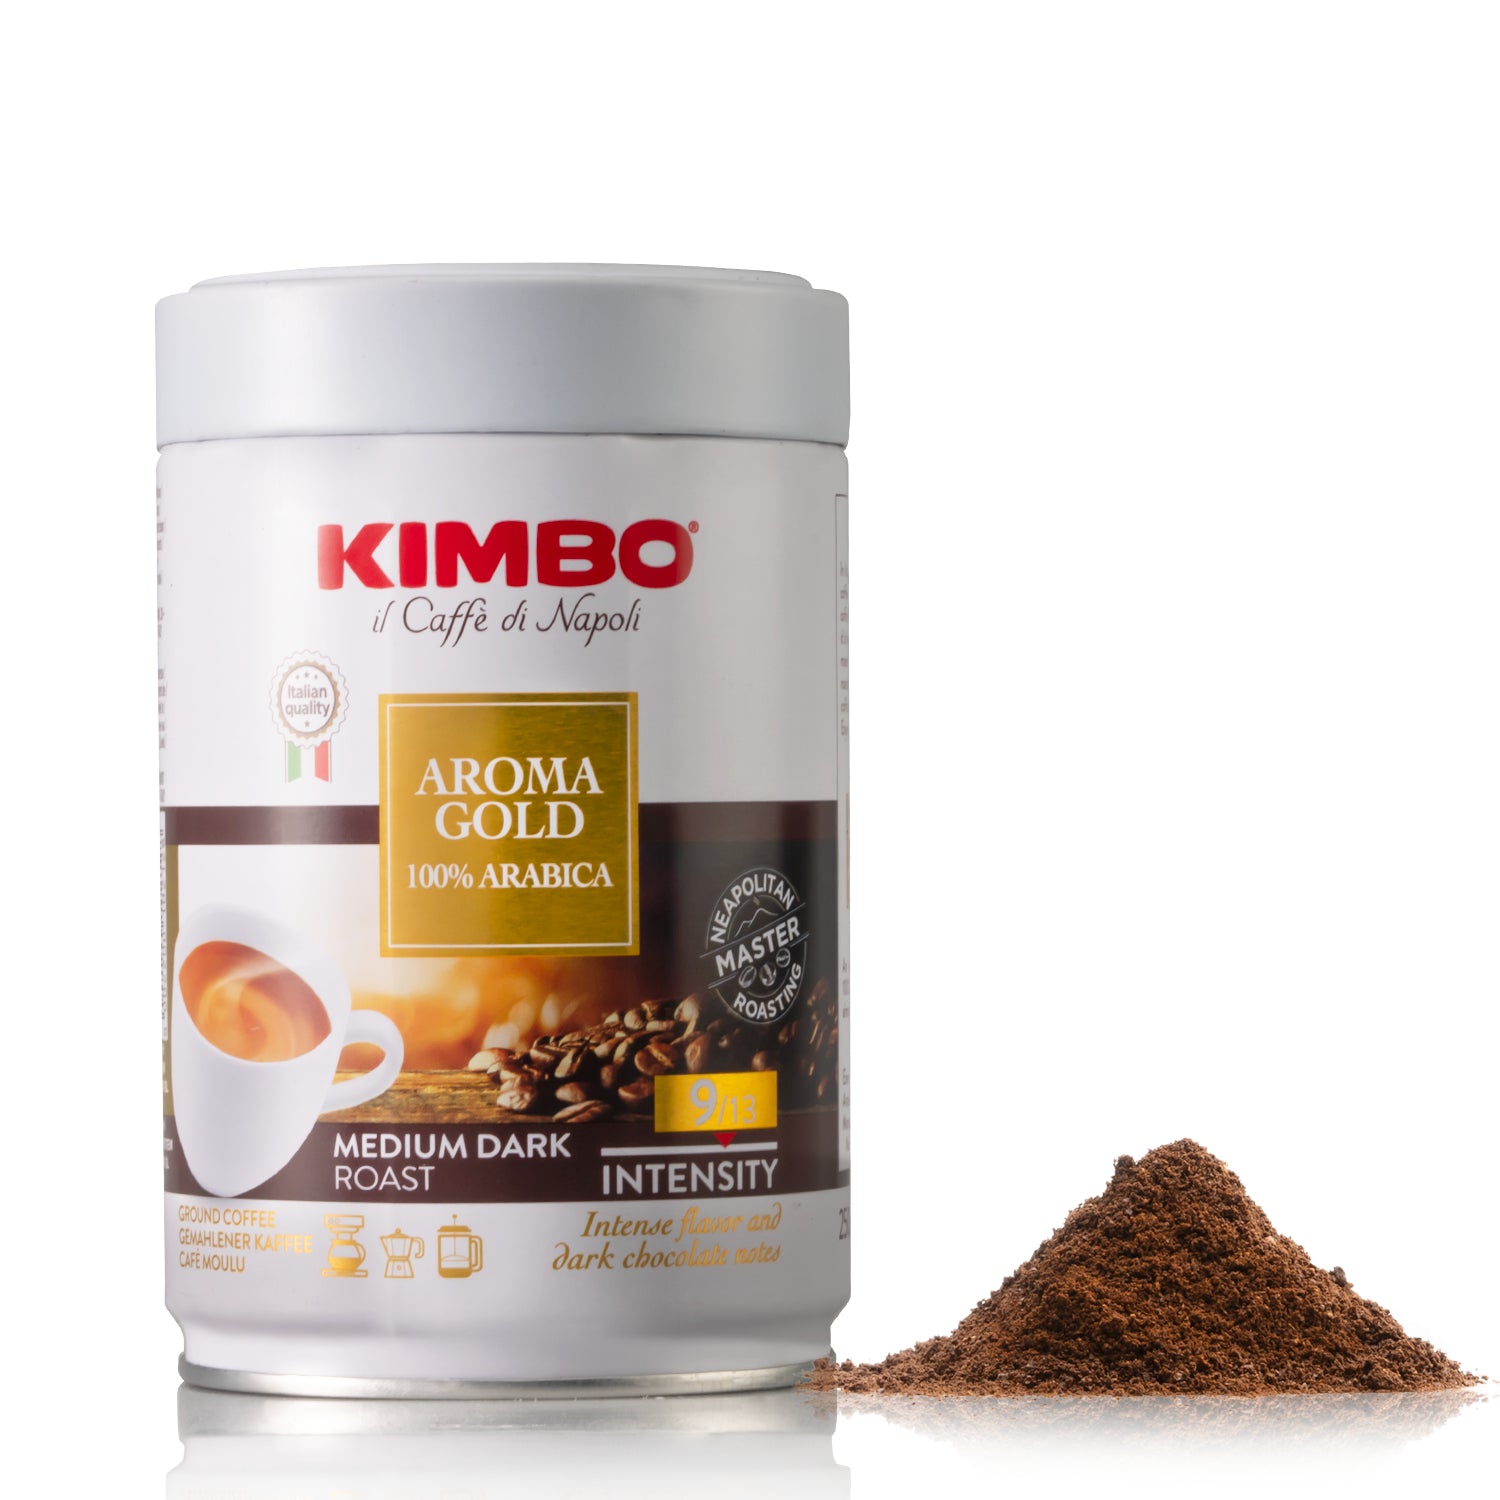 Kimbo il Caffe di Napoli Aroma Gold 100% Arabica Ground 250g Tin With Coffee